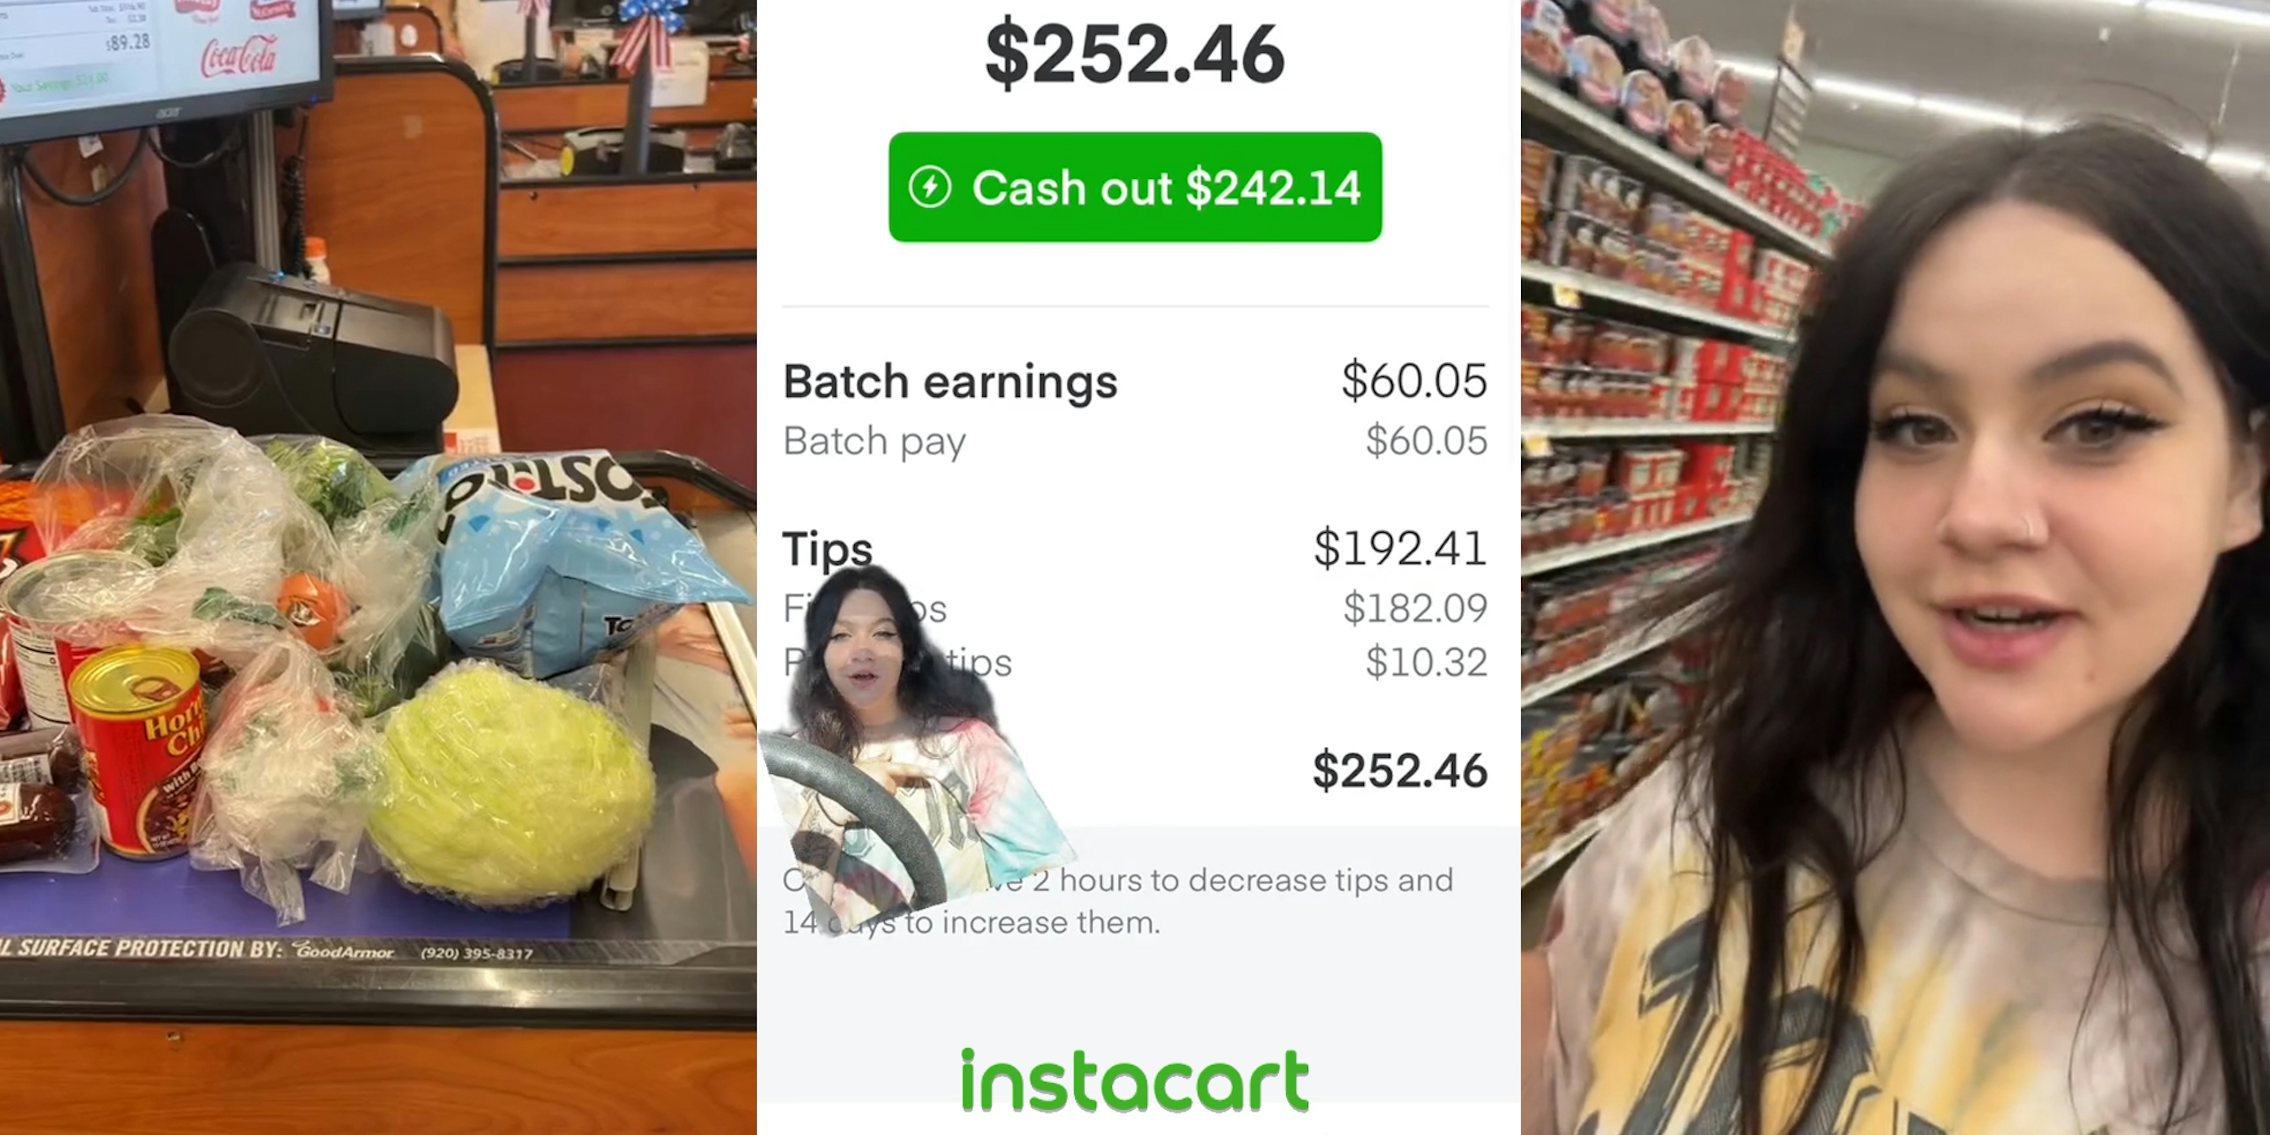 Instacart order on store checkout belt (l) Instacart shopper greenscreen TikTok over image of Instacart batch earnings $252.46 with Instacart logo at bottom (c) Instacart shopper speaking in store (r)